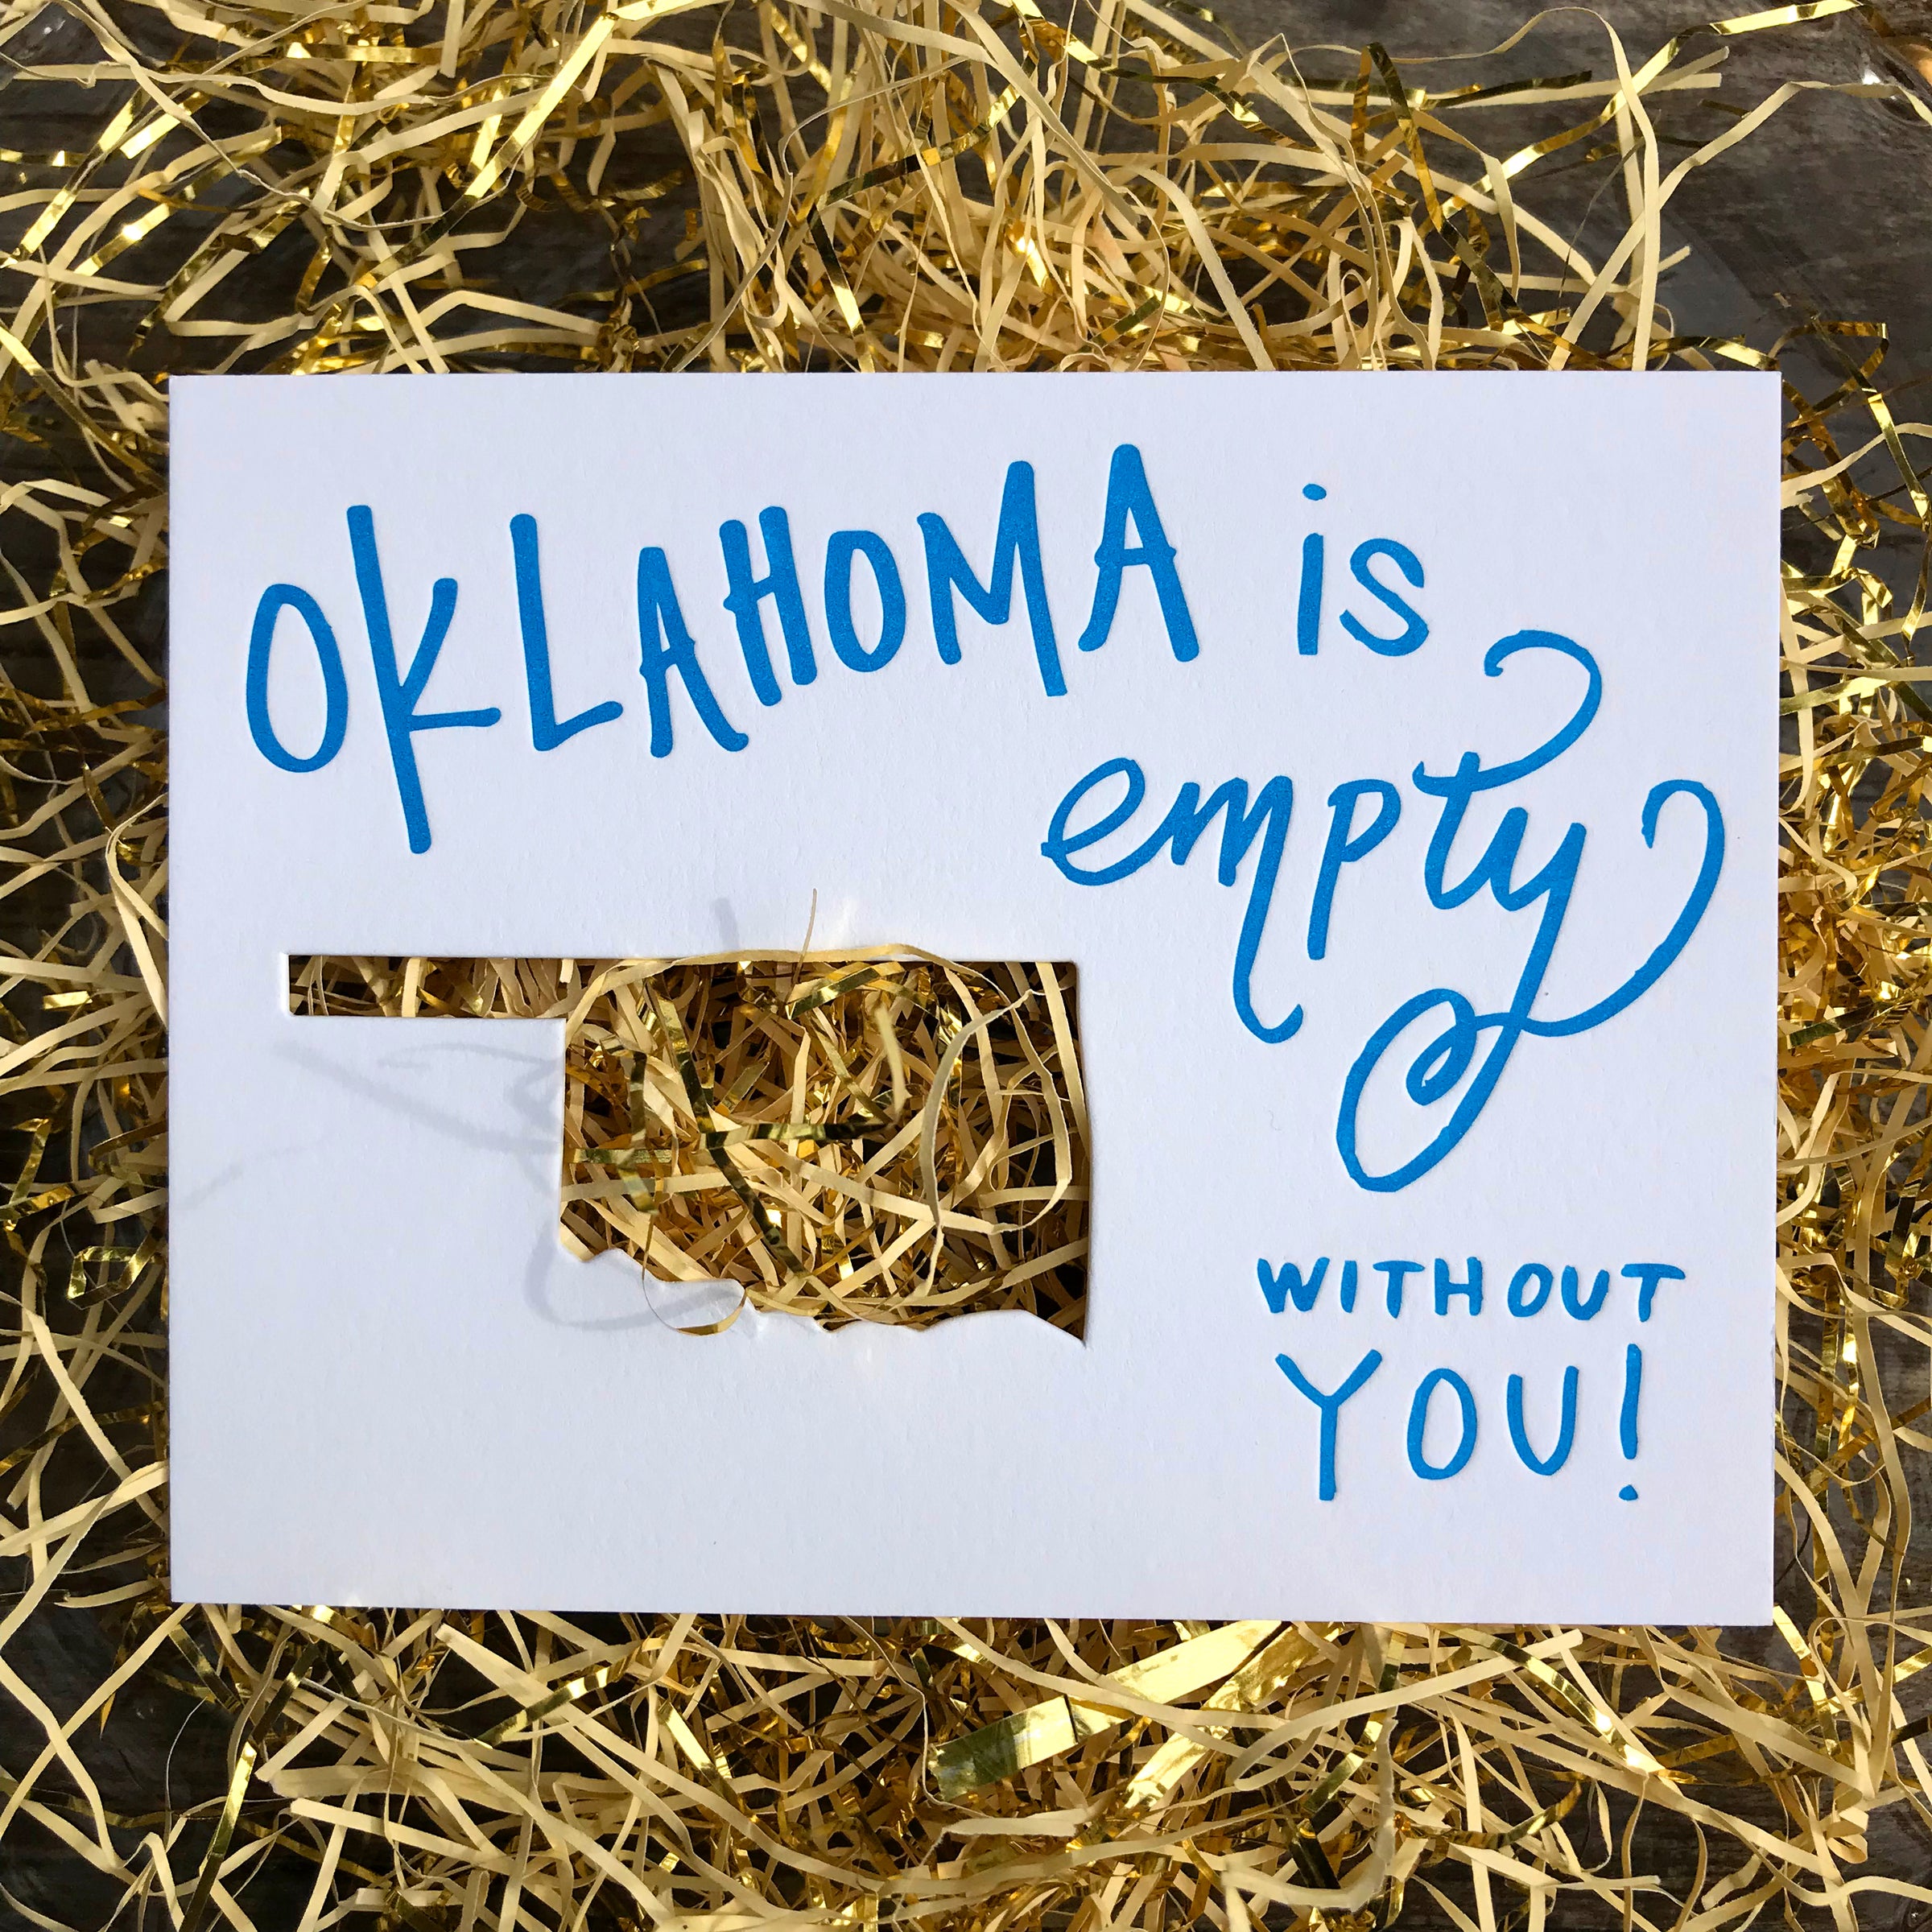 Oklahoma is Empty | Die-Cut Letterpress Greeting Card